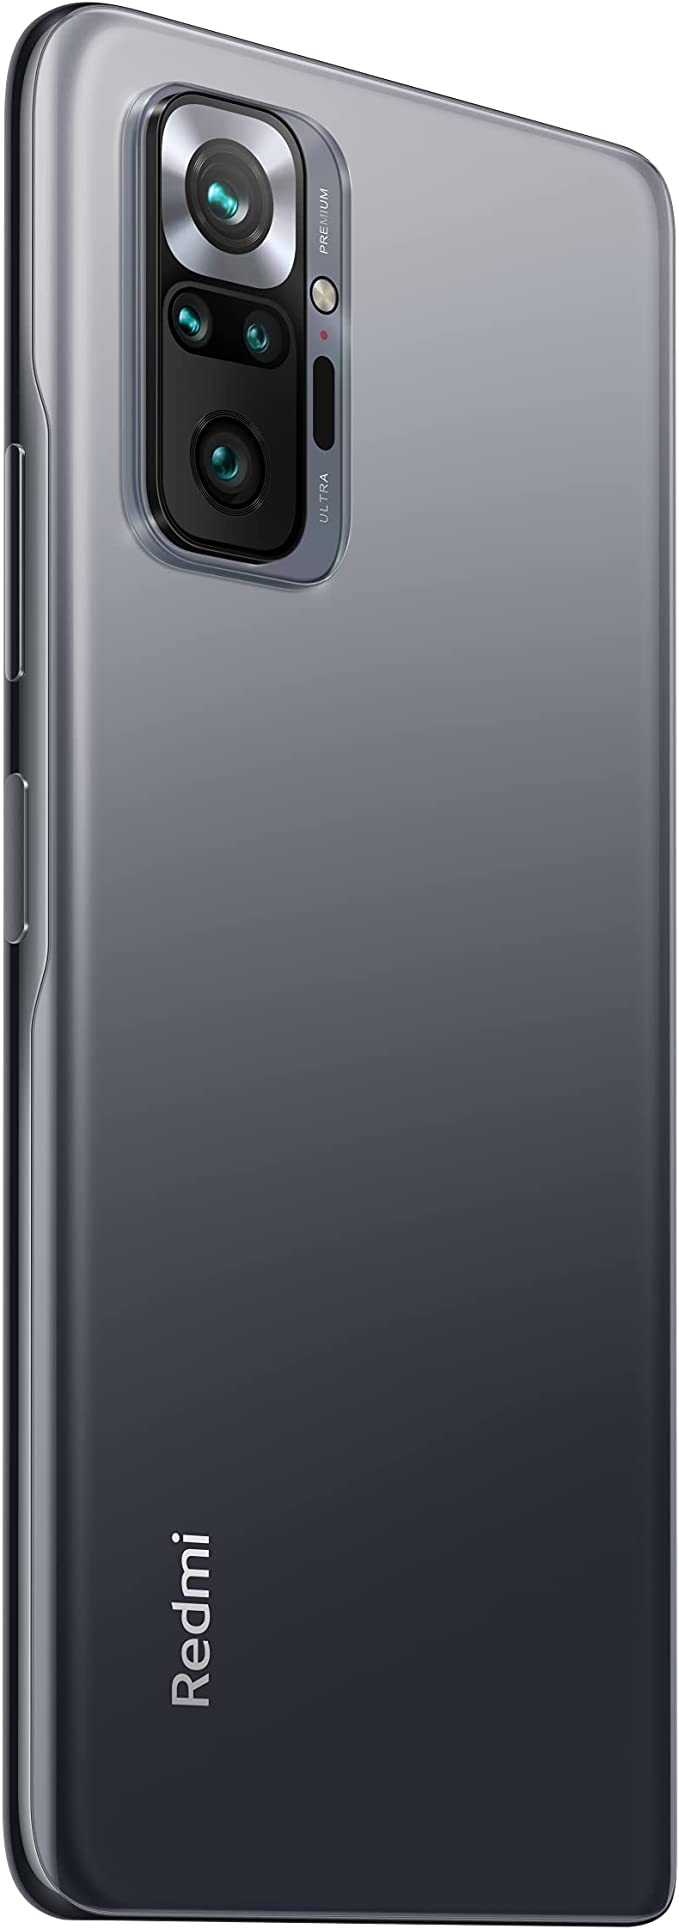 Xiaomi Redmi Note 10 Pro - Smartphone 6+128 GB, 6.67 Inch 120Hz AMOLED DotDisplay, Snapdragon 732G, 108MP Quad Camera, 5020mAh, Onyx Gray